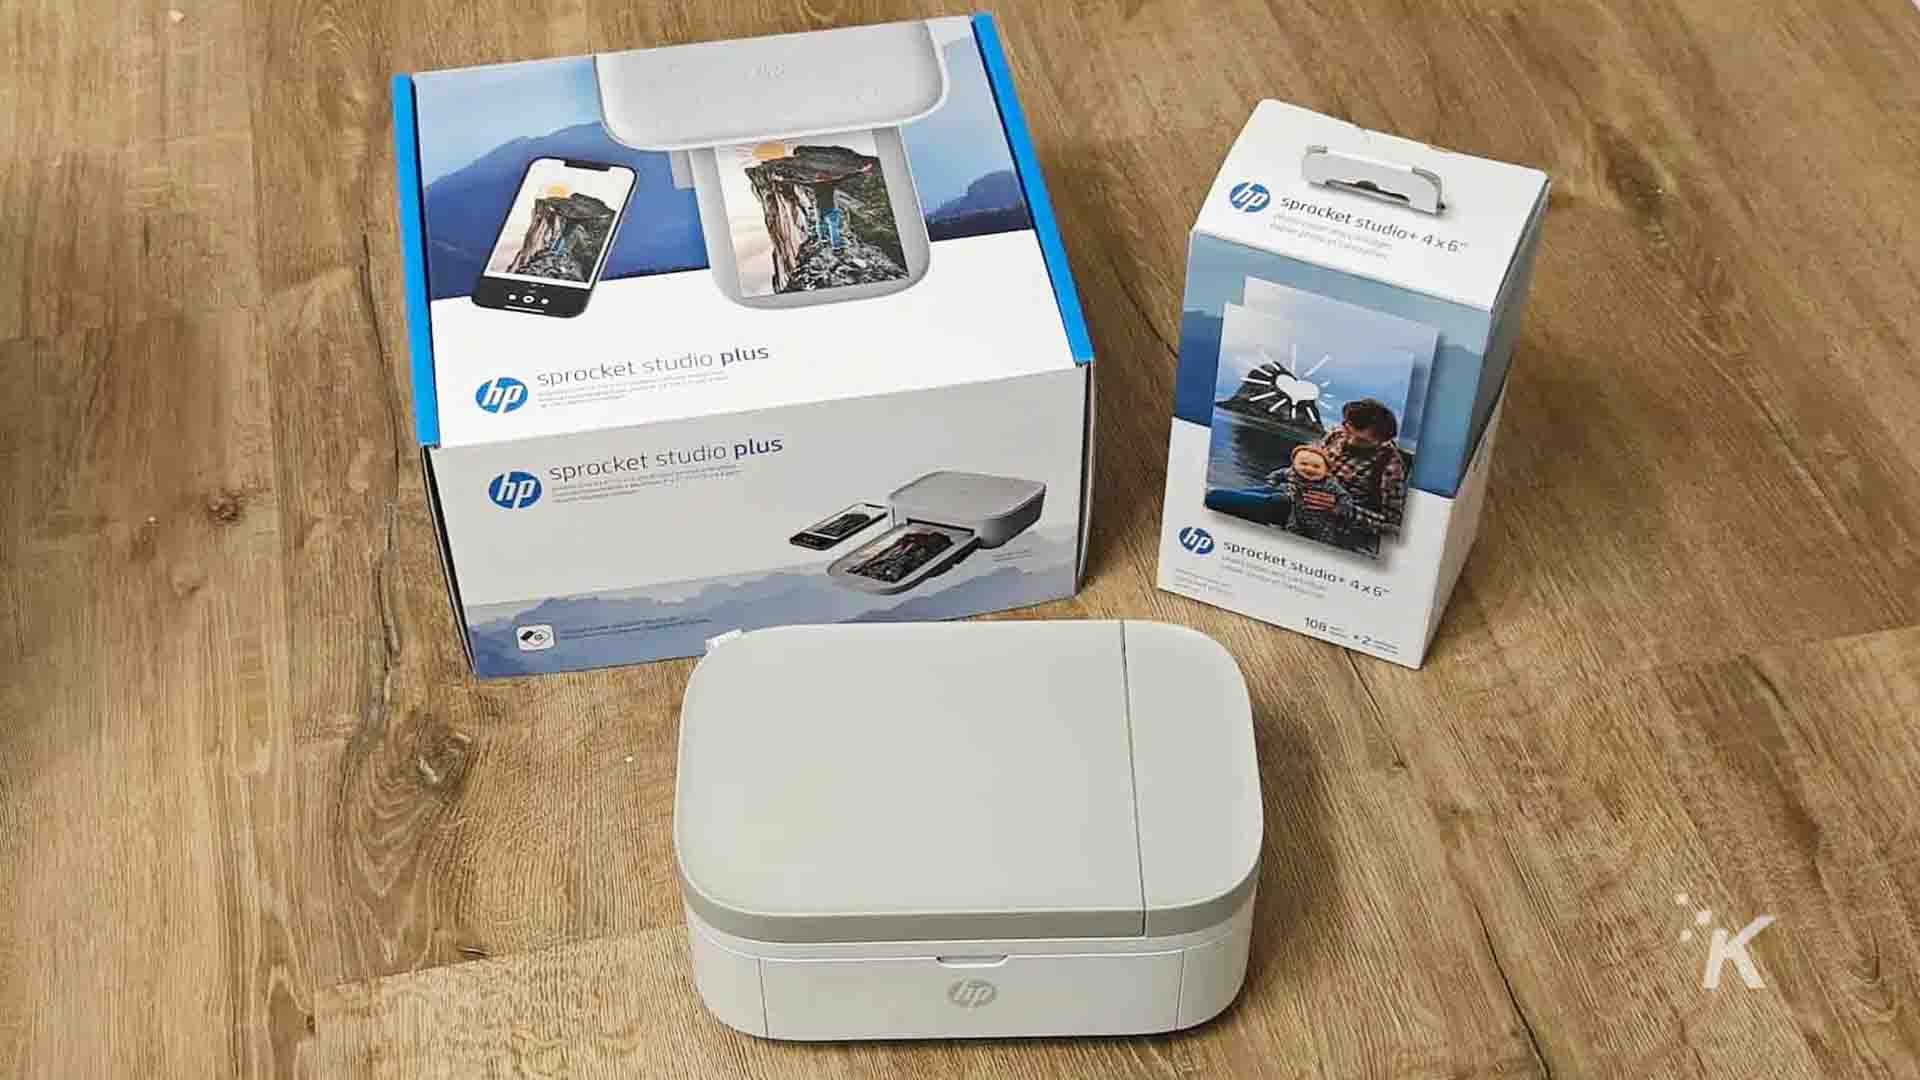 HP Sprocket Studio Plus Printer with Retail Boxes